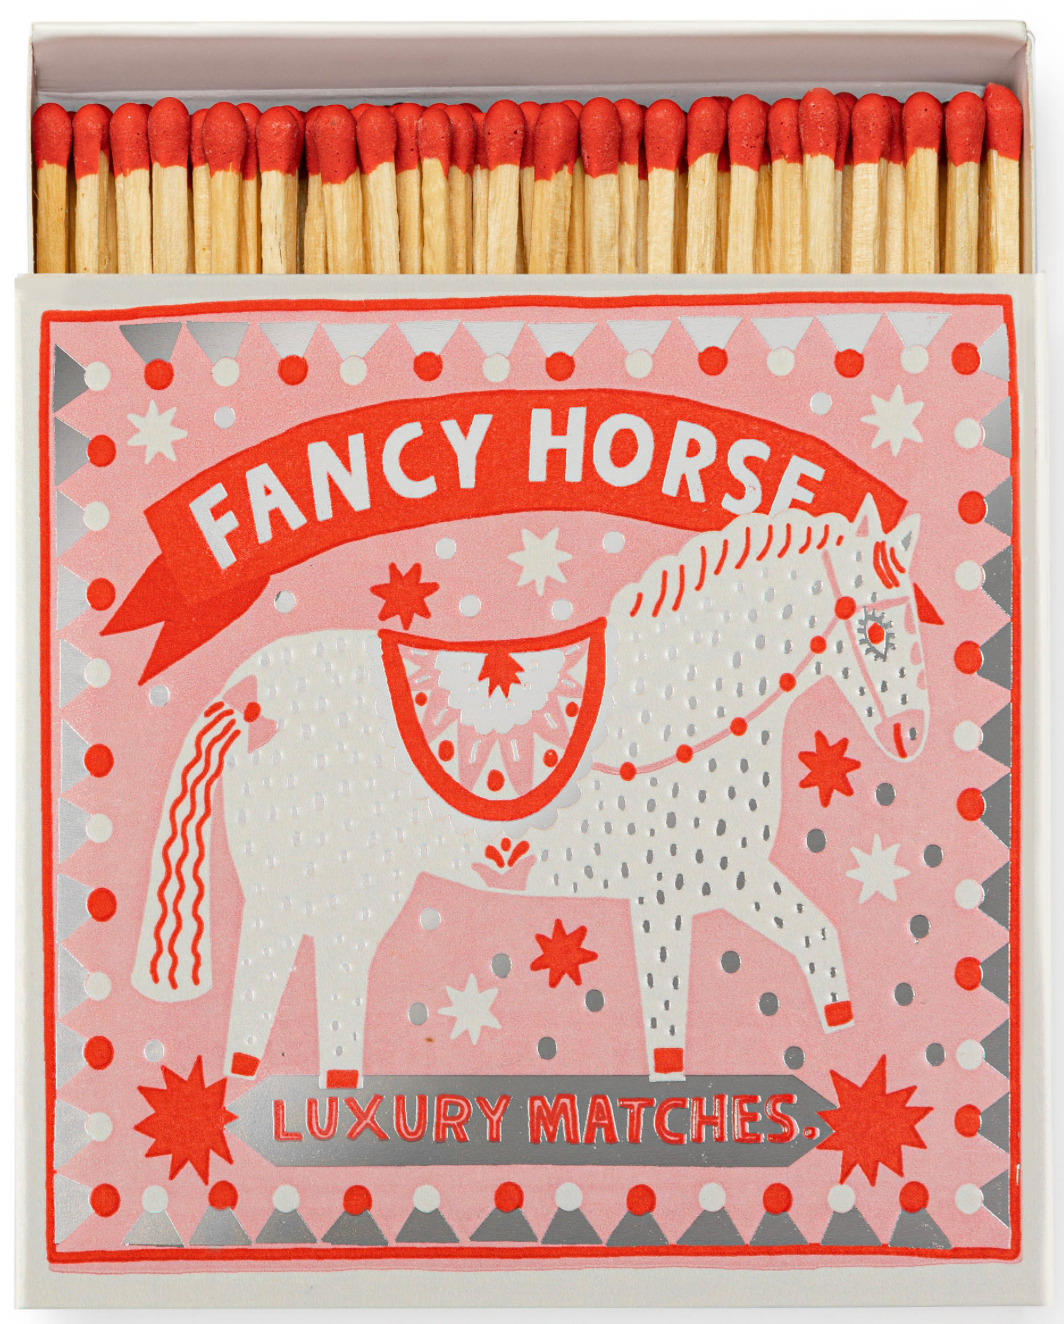 Archivist Archivist | Fancy Horse Luxury Matches